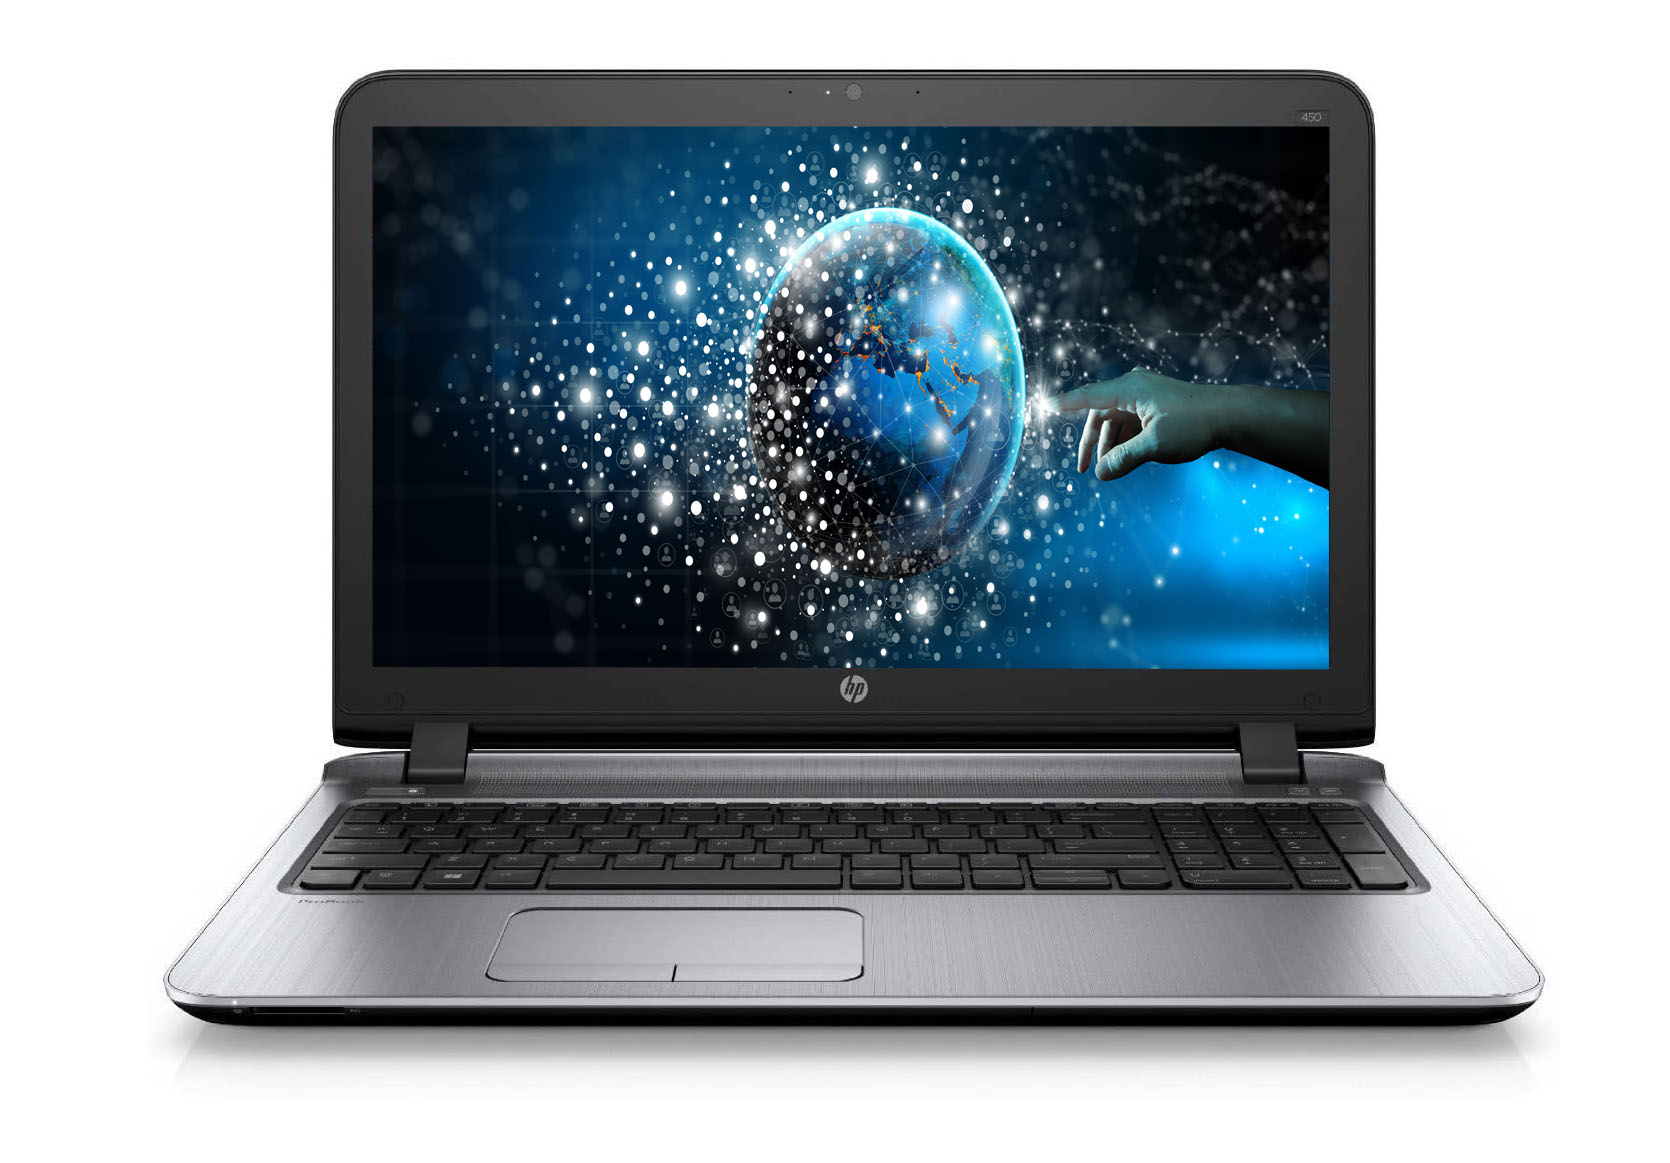 HP エイチピー 交換バッテリー ProBook 450 G3 455 G3 470 G3 対応用 RI04 RI04XL P3G15AA HSTNN-PB6Q TPN-Q141ブラック  GlobalSmart 高性能 互換バッテリー